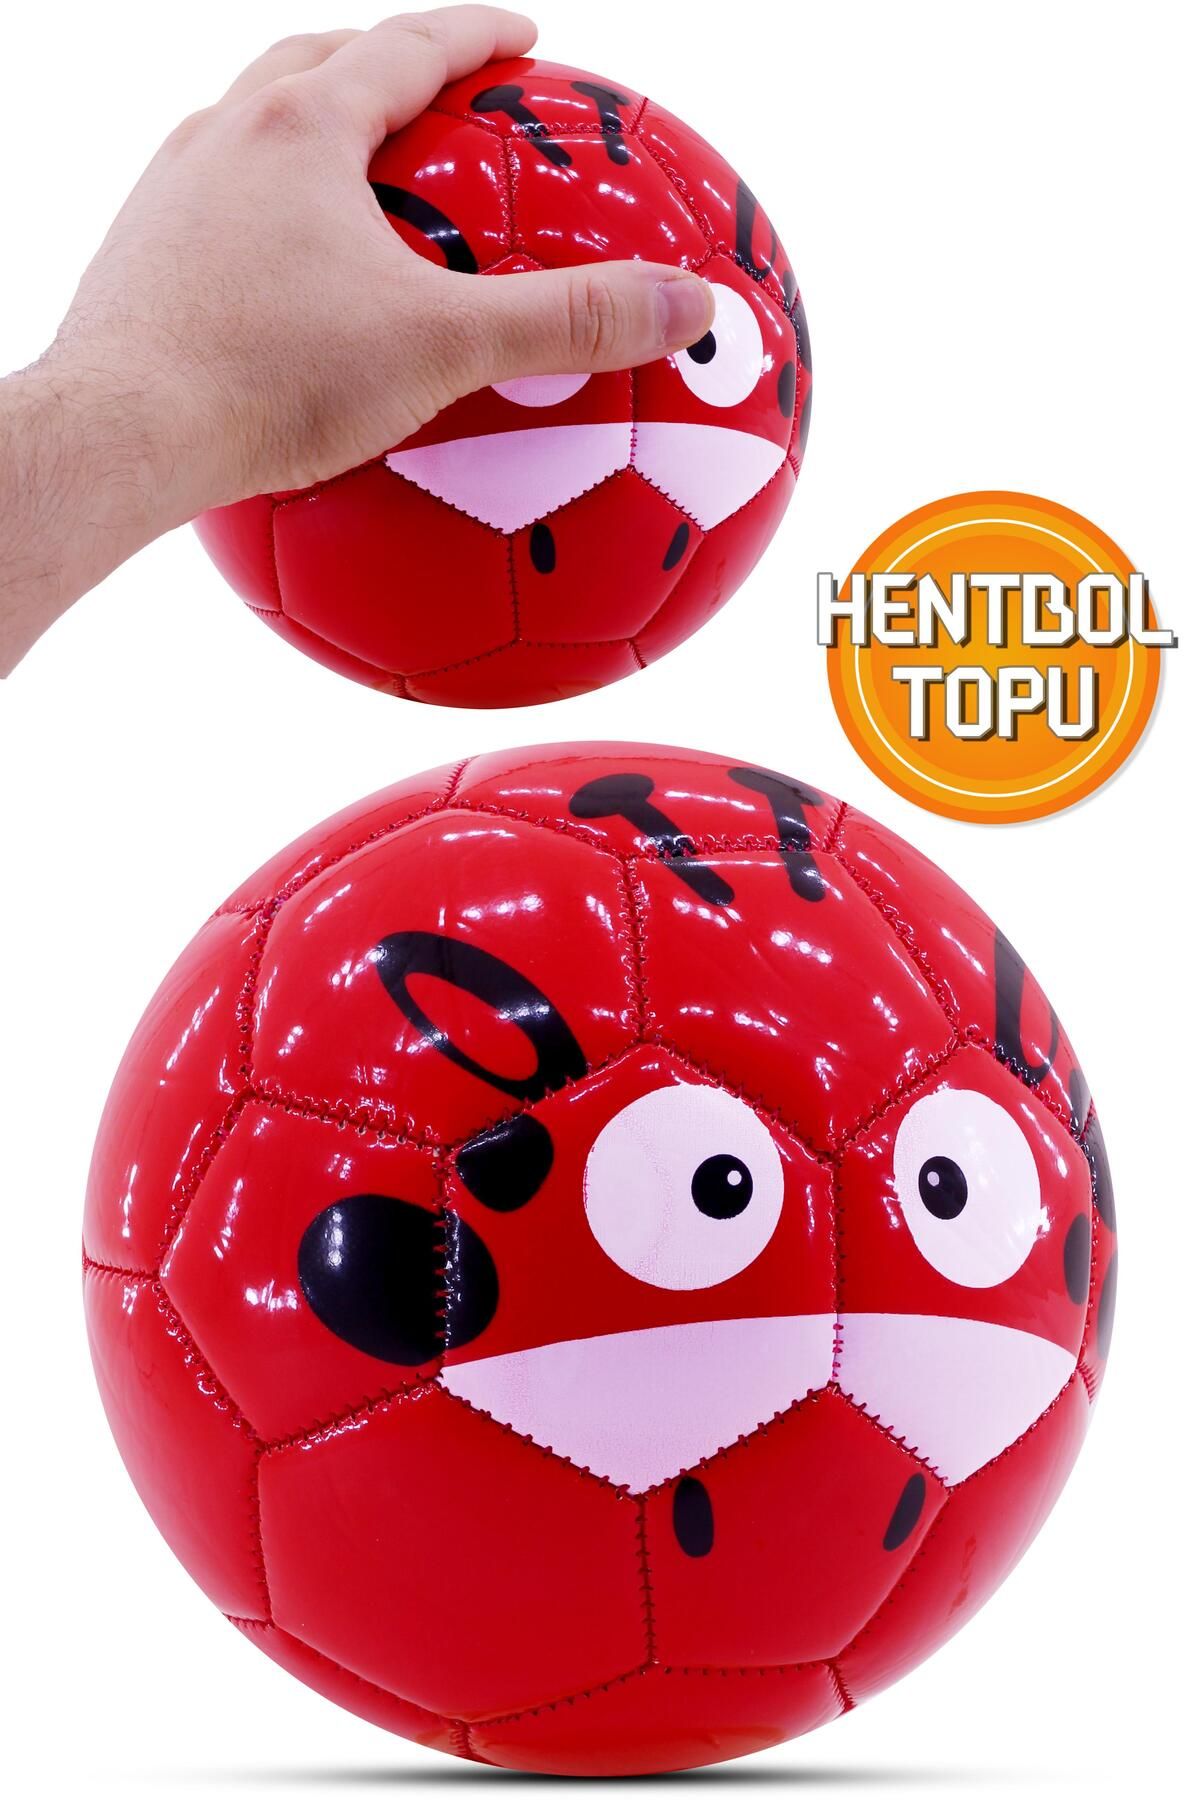 Telvesse Hentbol Topu Renkli Parlak Katman Çocuk Mini Futbol Topu No:1 İç Mekan Minik Top